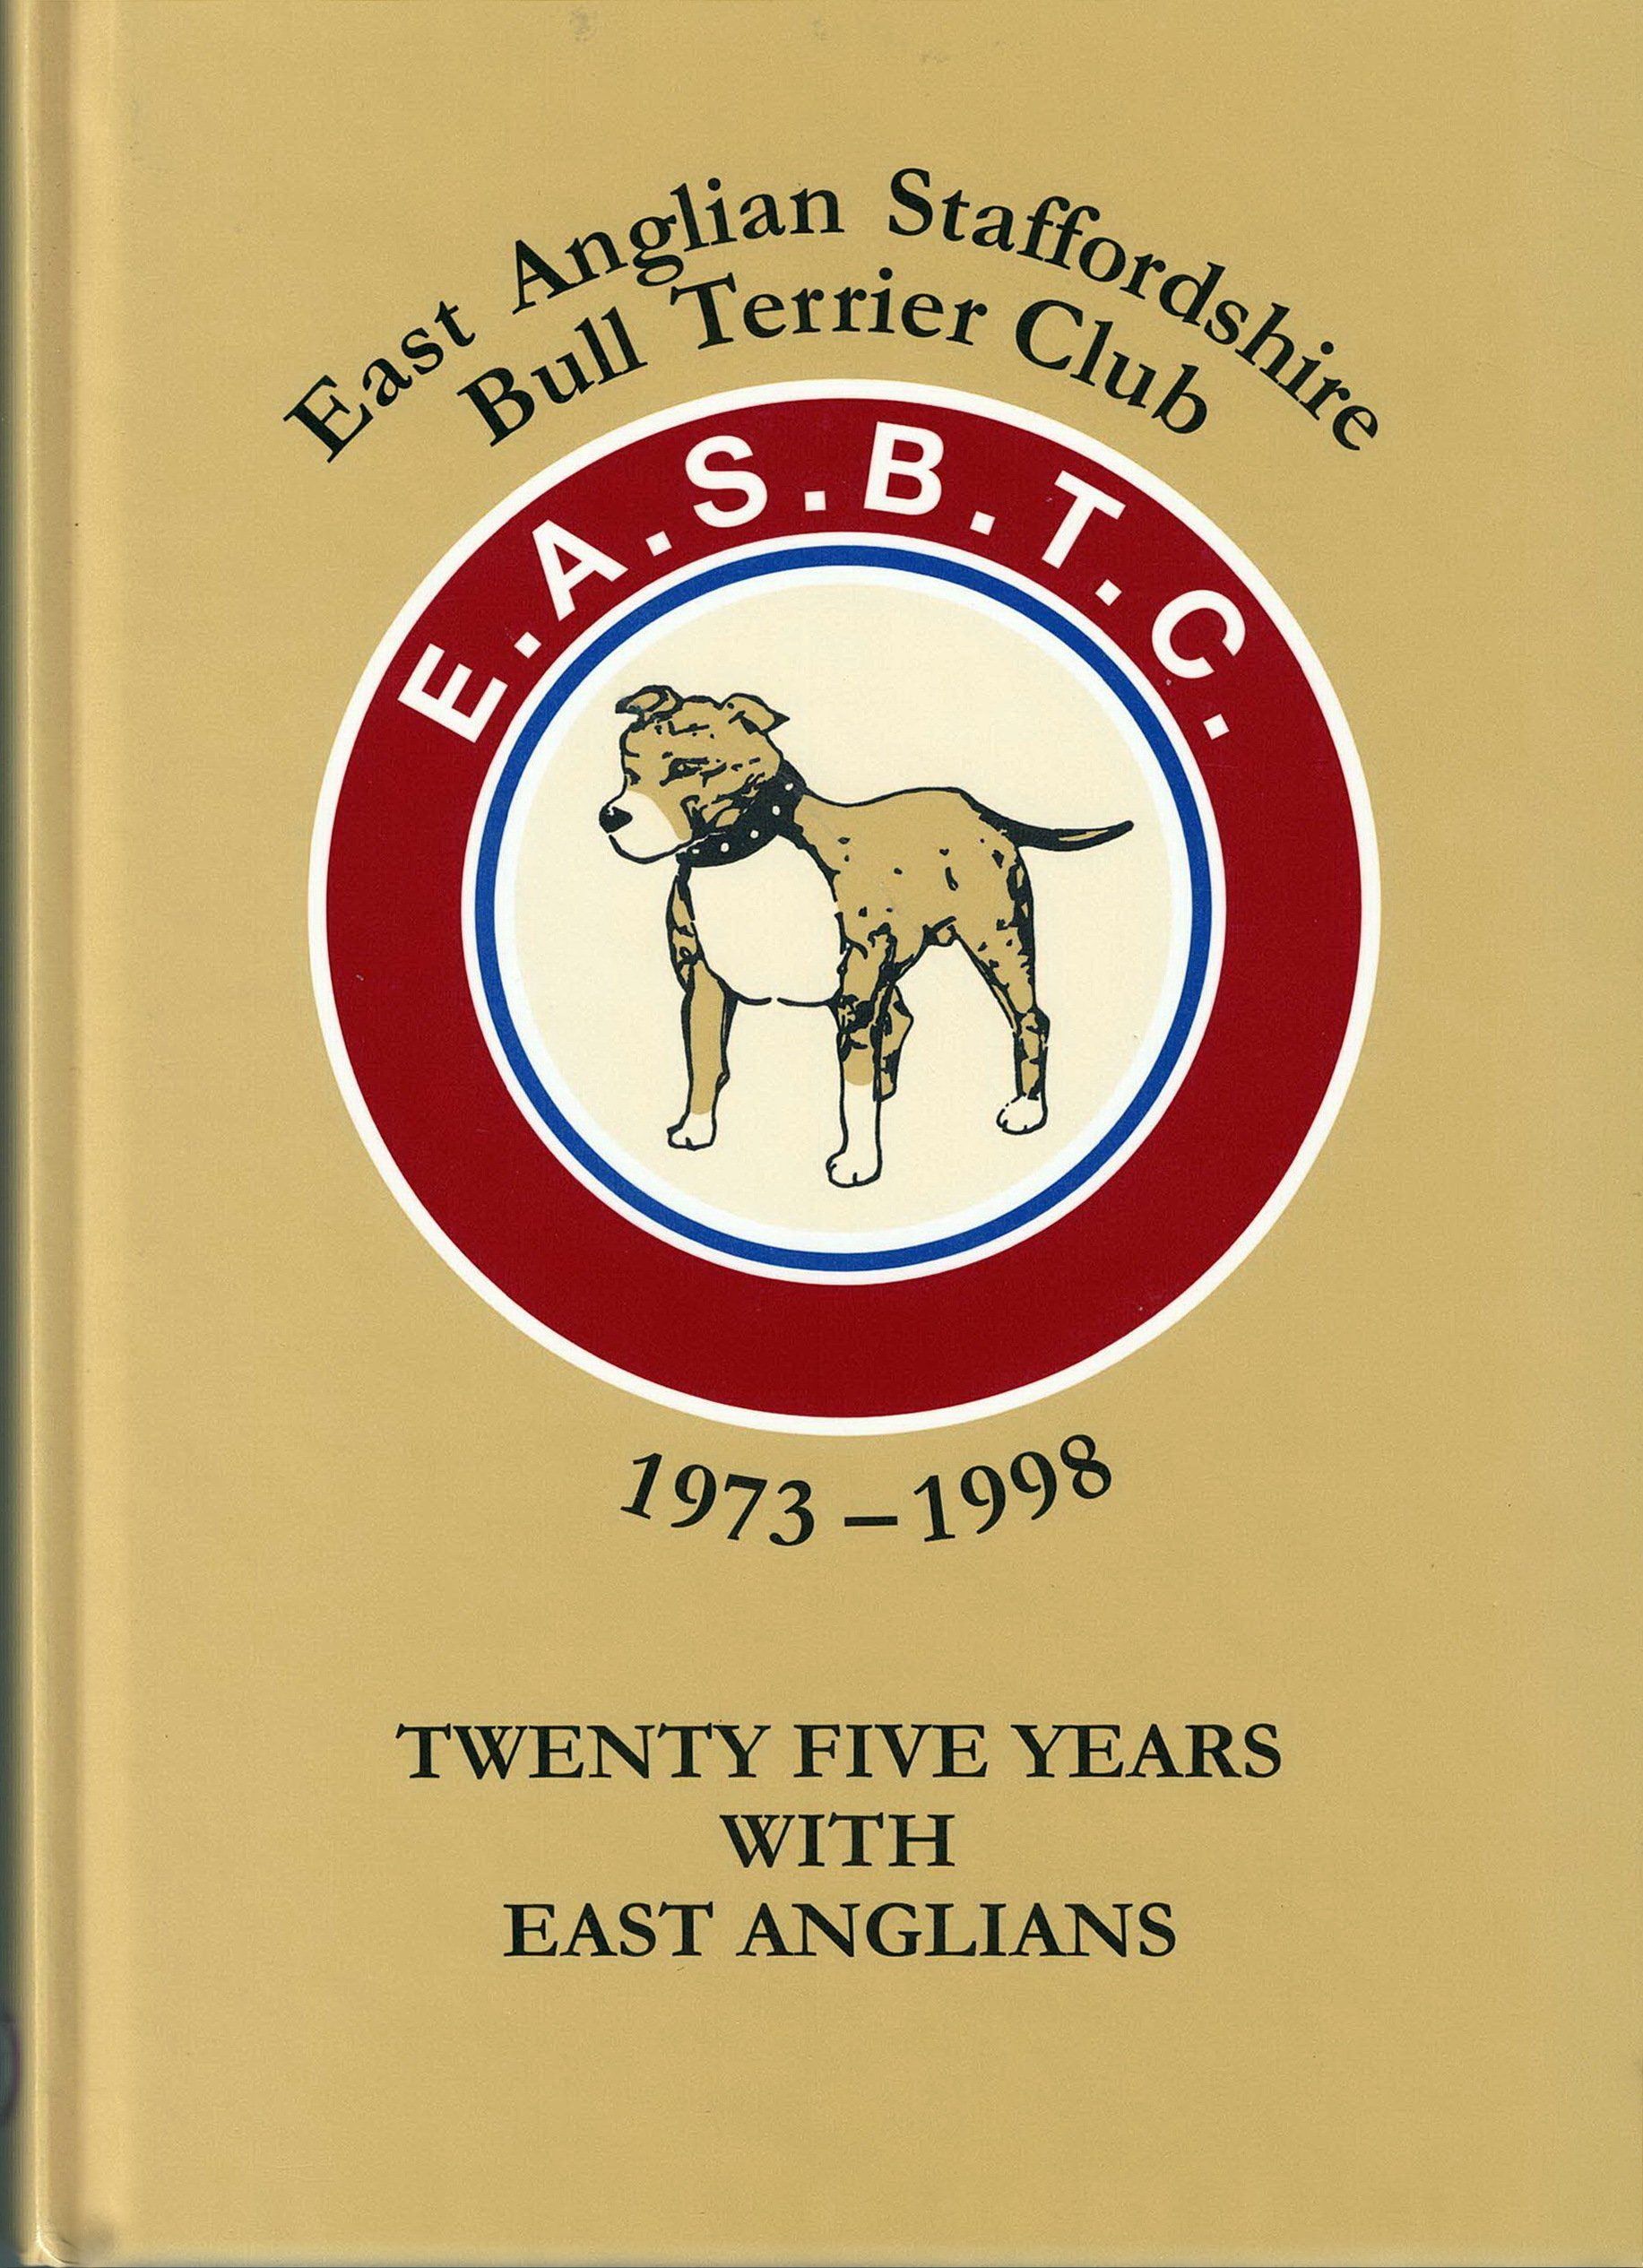 East Anglian Staffordshire Bull Terrier Club  Twenty Five Years with East Anglians  1973-1998